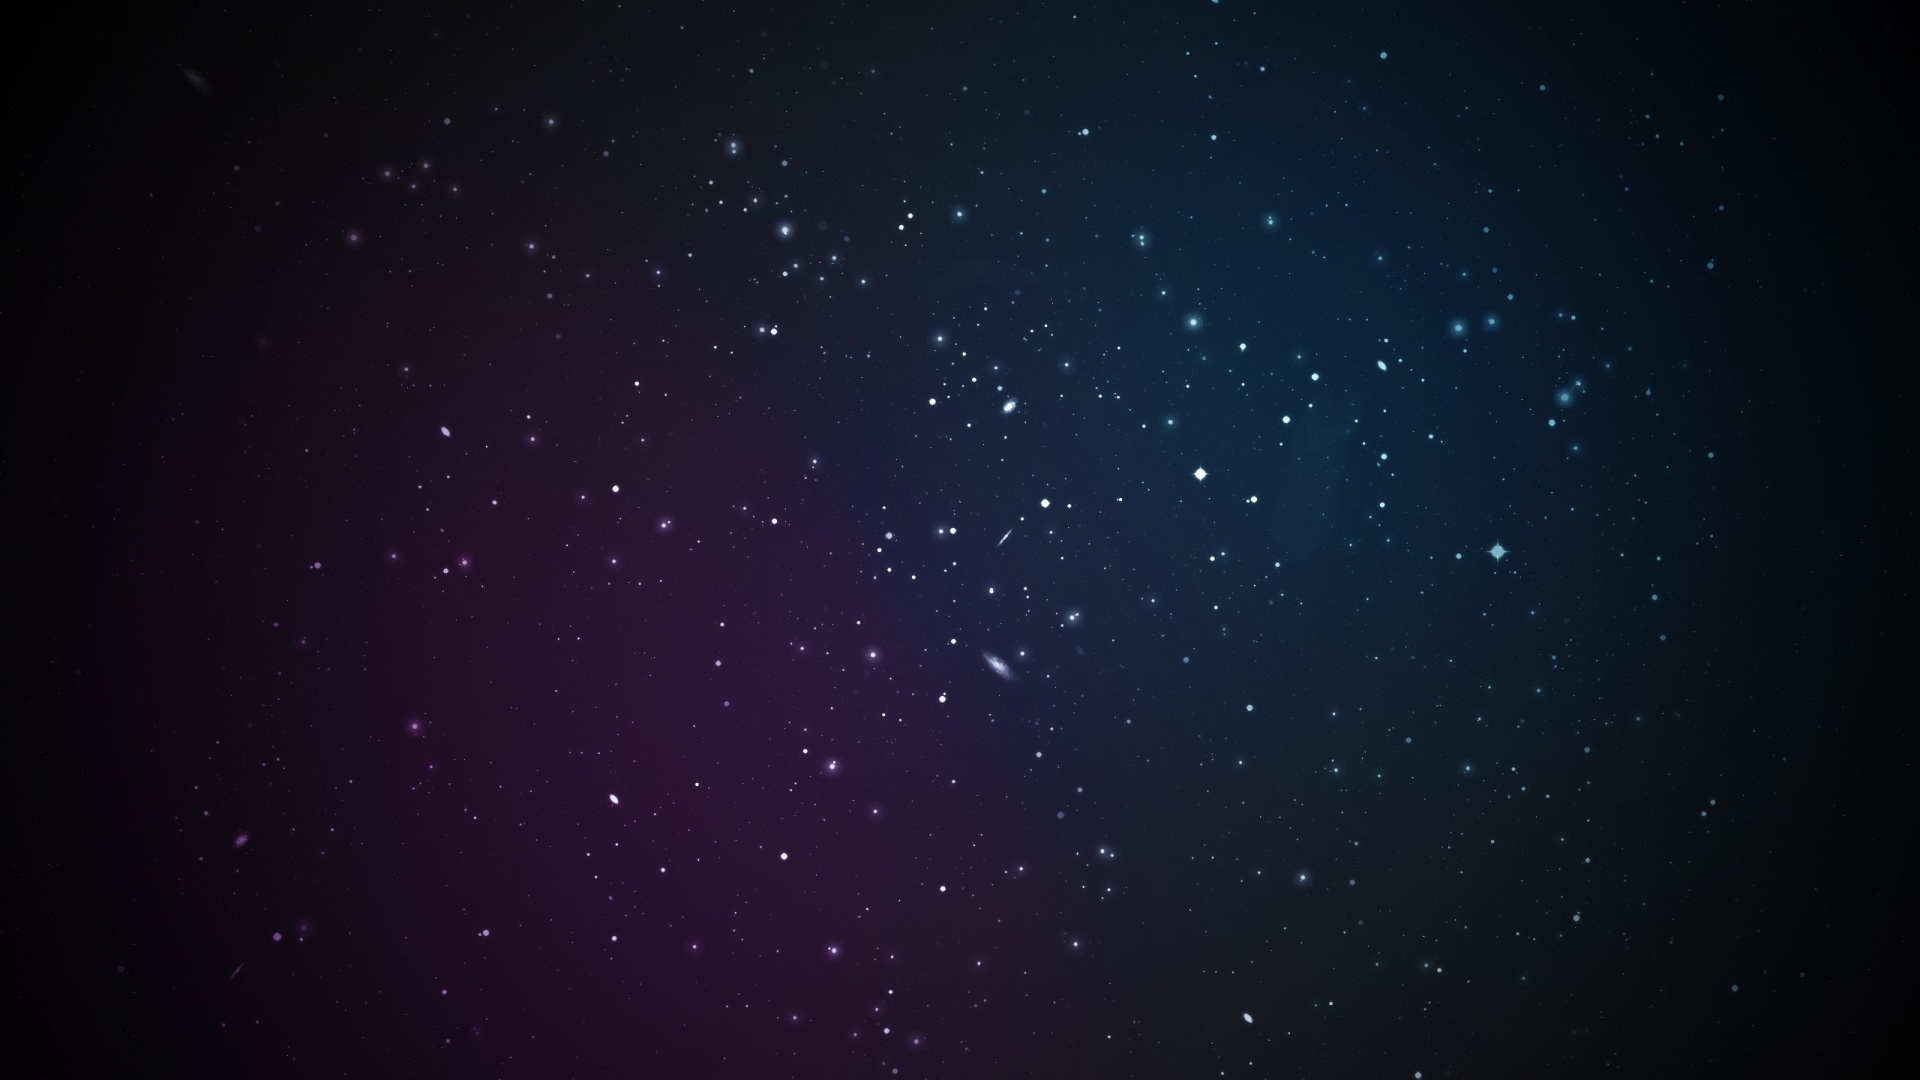 Animated Galaxy Stars Background